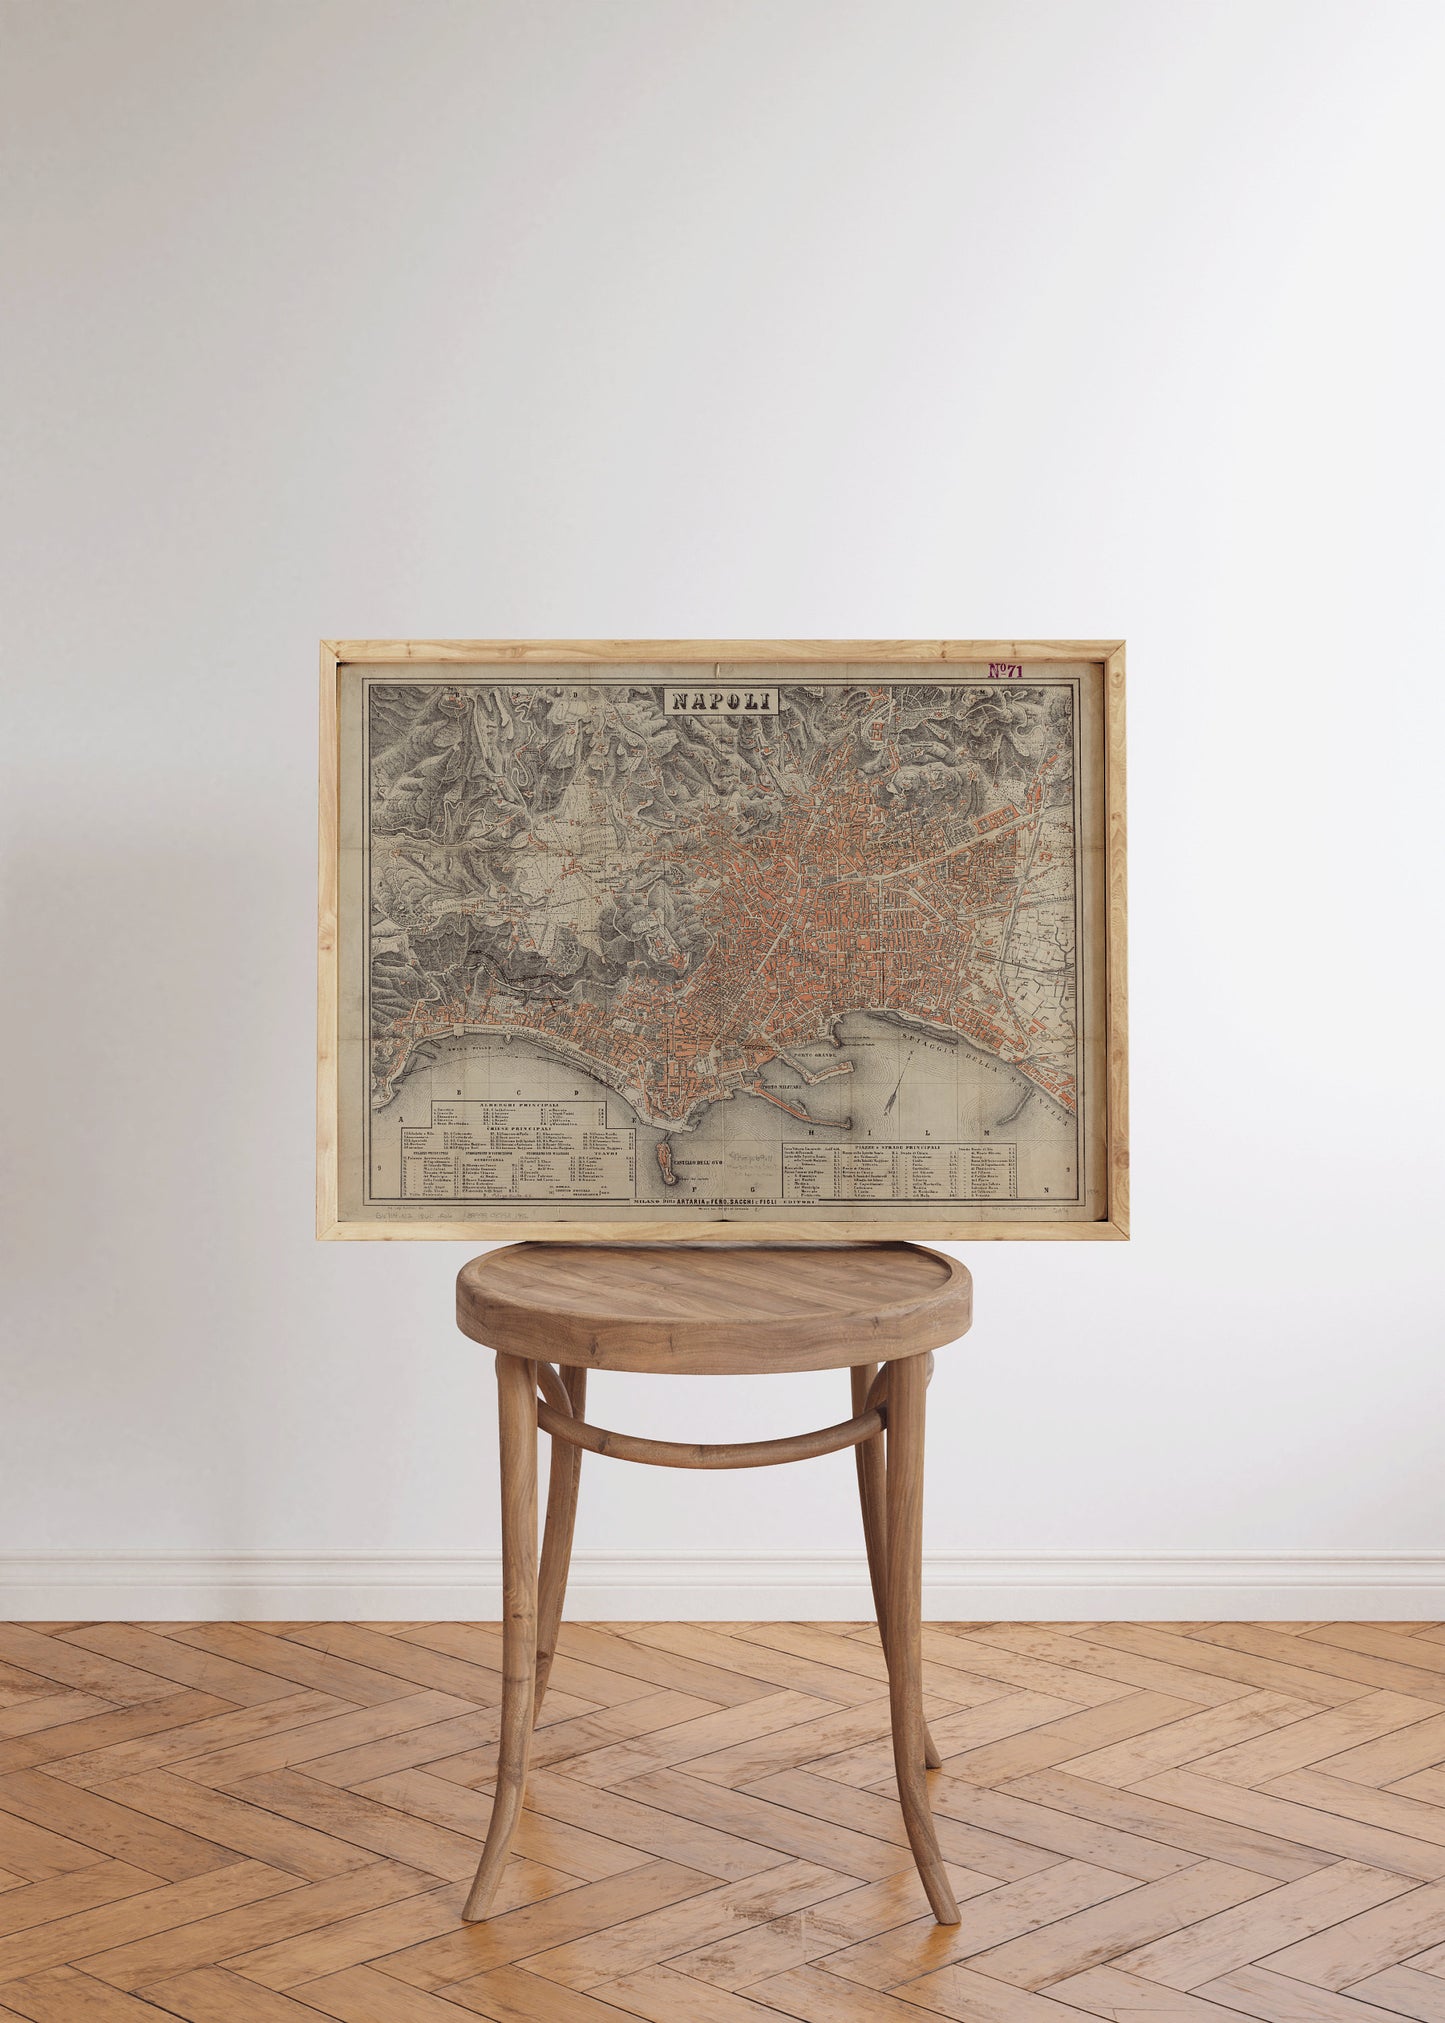 Vintage Map Print Napoli Naples Italy Framed